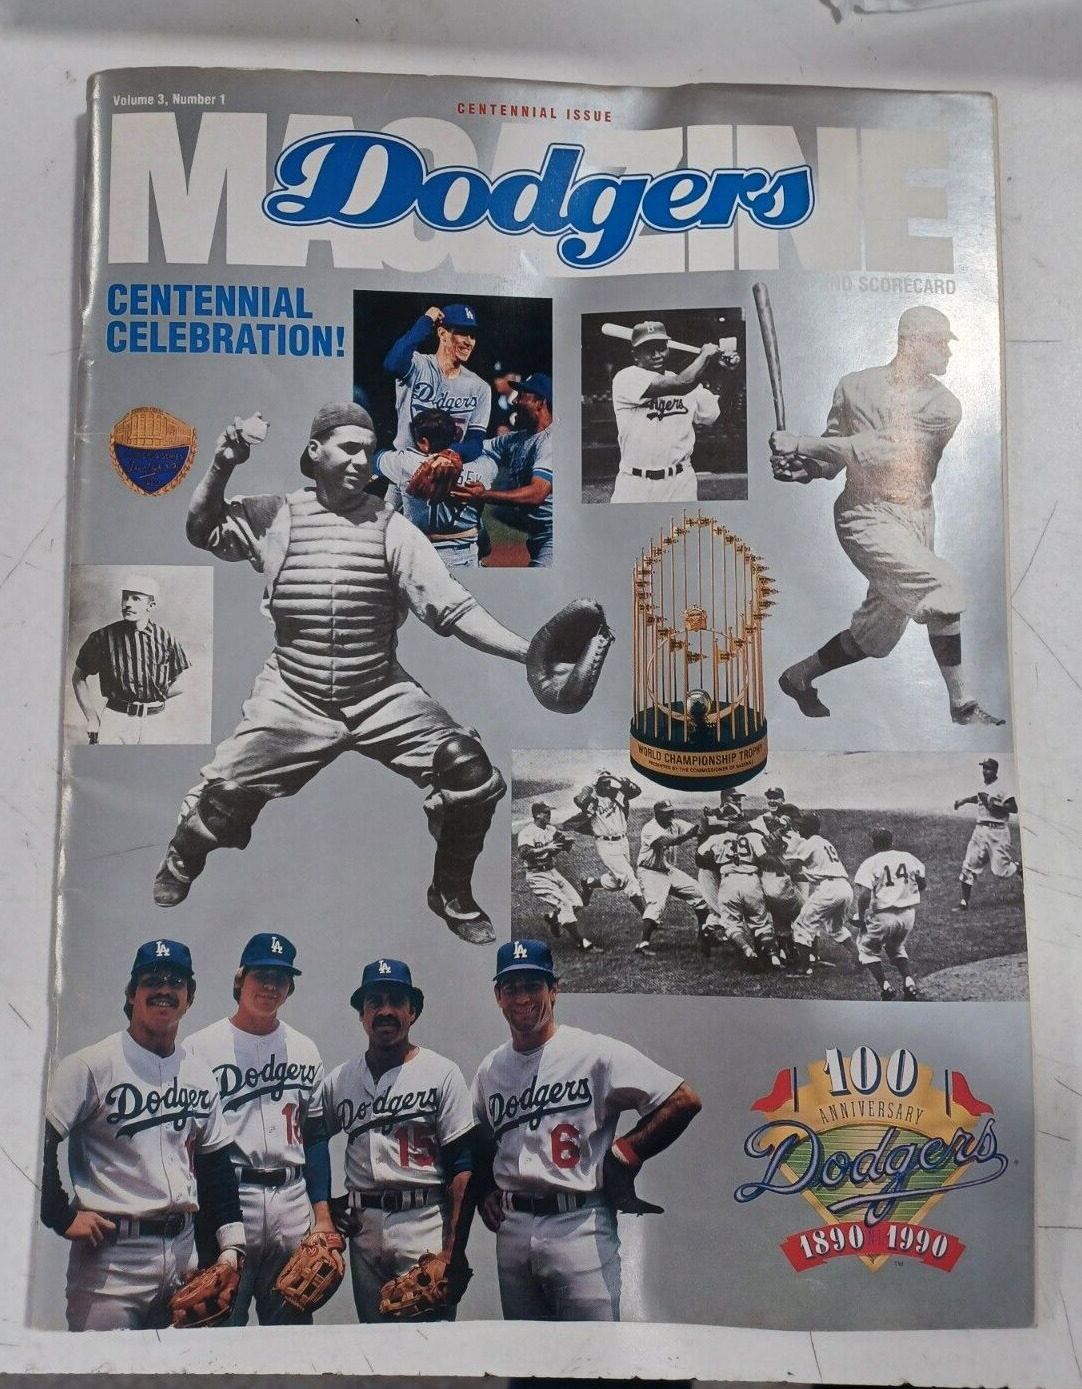 Vintage 1990 MLB LA Dodgers Magazine Volume 3 Number 1 Centennial Issue